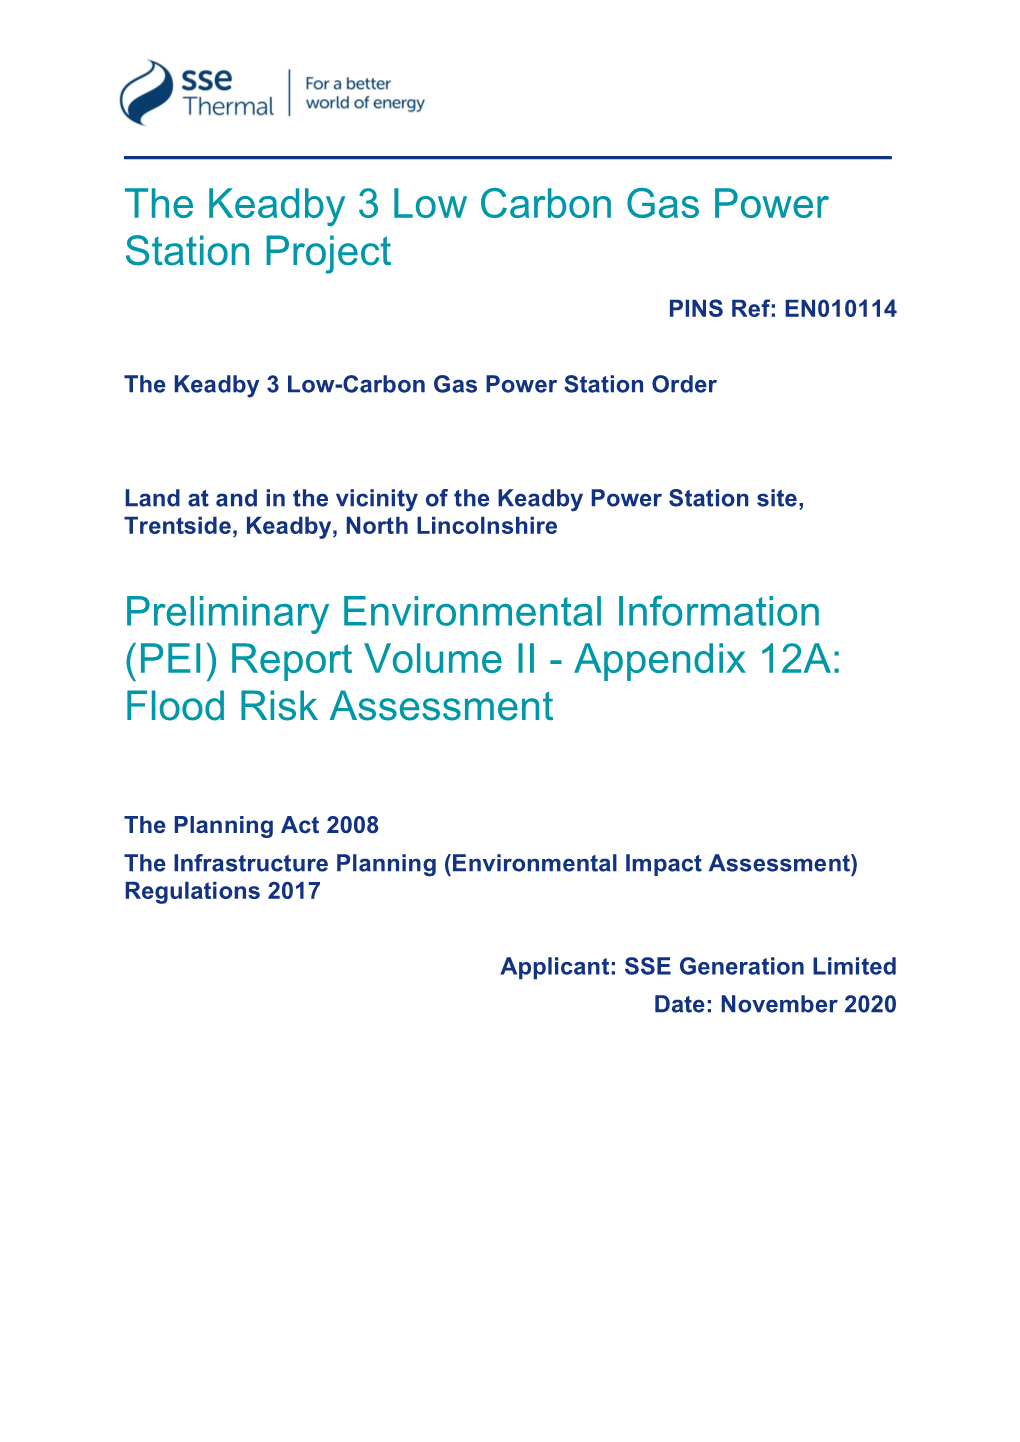 Appendix 12A: Flood Risk Assessment